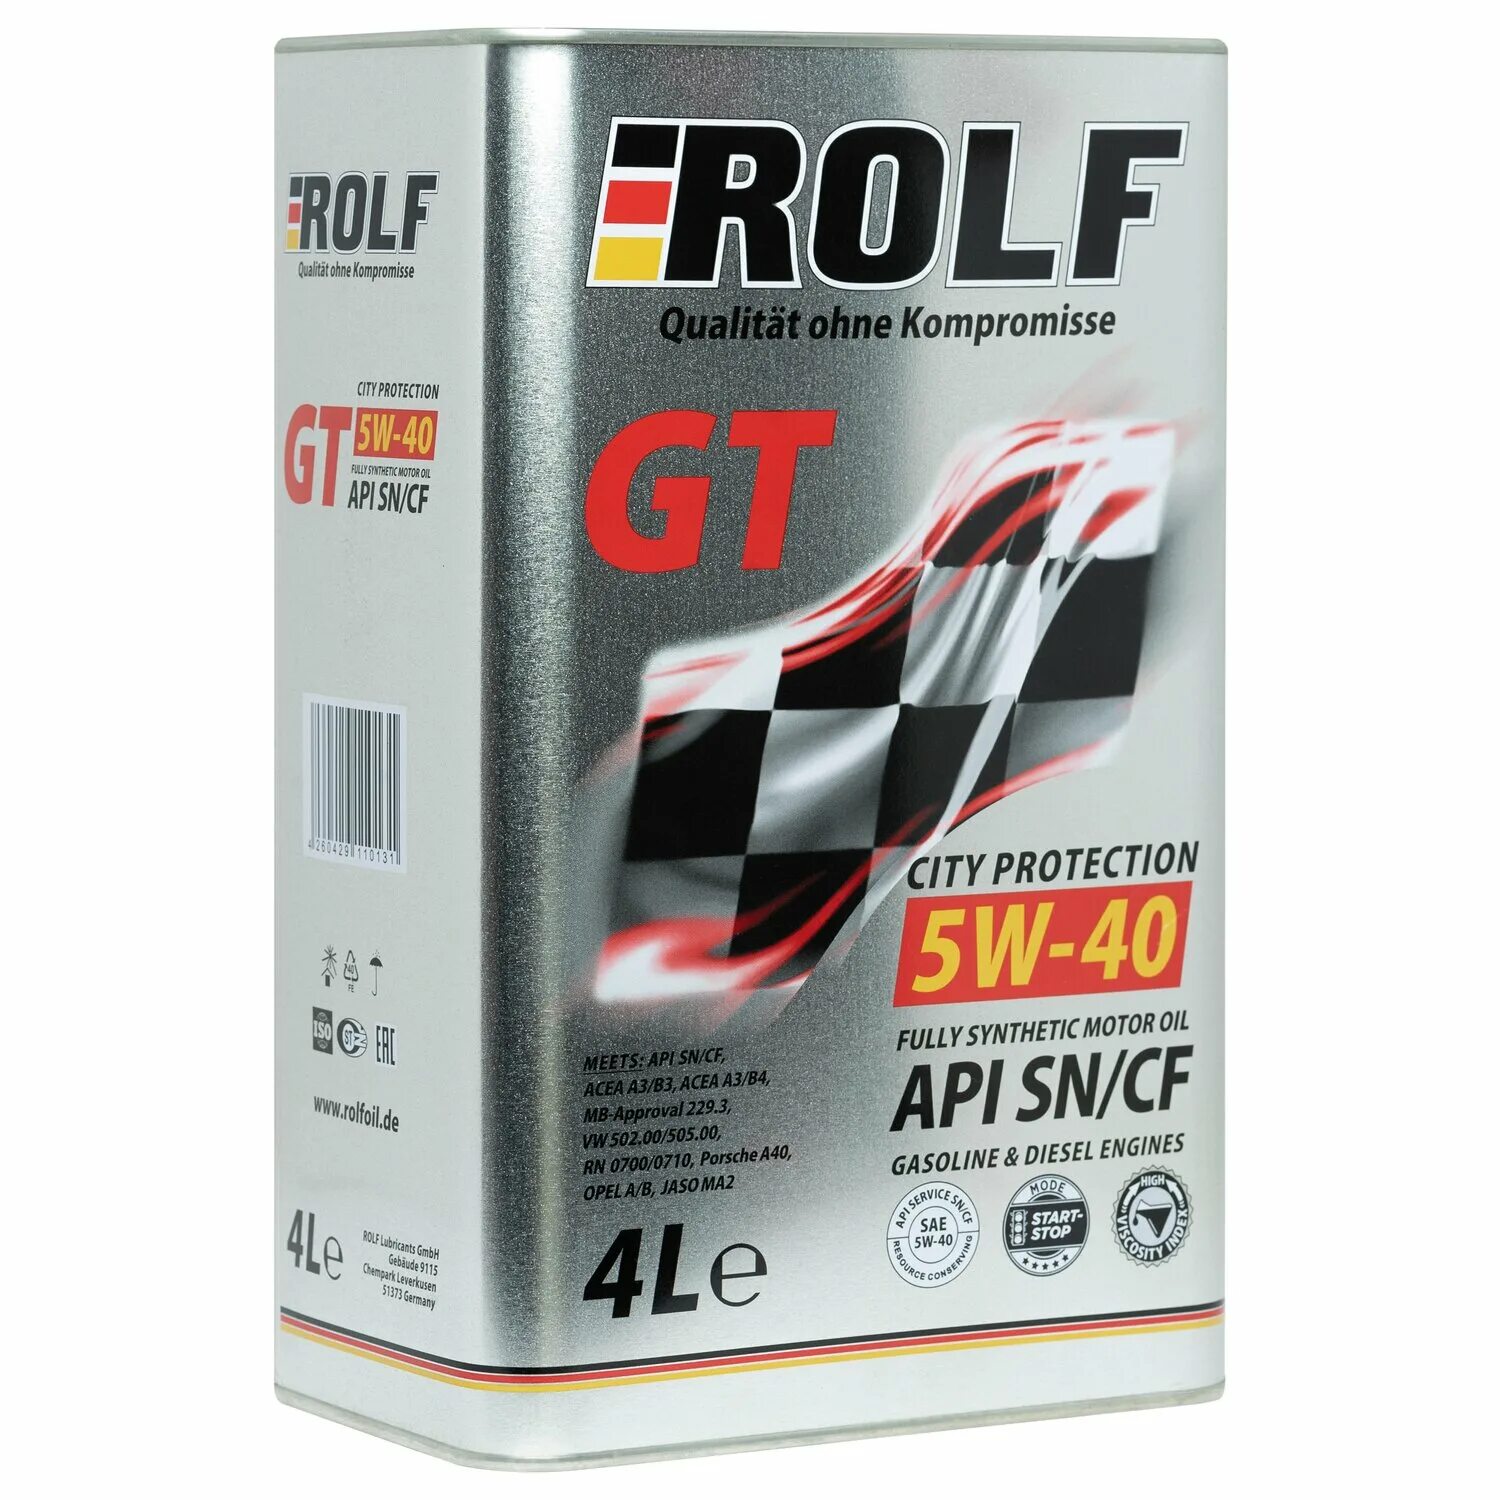 Rolf gt 5w 30 sn cf. Rolf gt 5w-40. Rolf gt 5w-30 SN/CF 4л. Моторное масло Rolf gt 5w-40 синтетическое 4 л.